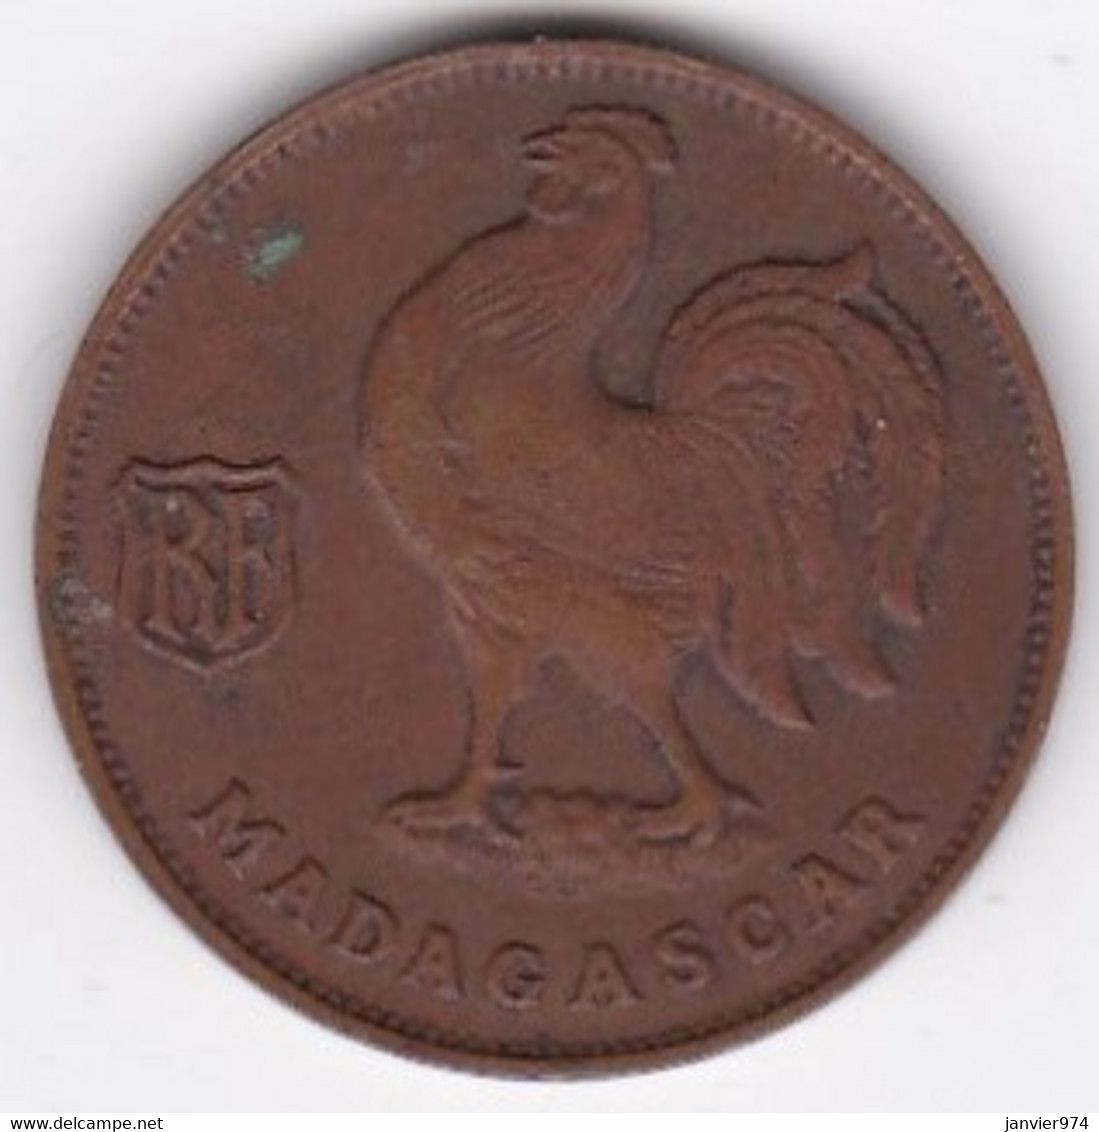 MADAGASCAR. FRANCE LIBRE. 1 Franc 1943. BRONZE, Lec 94 - Madagaskar